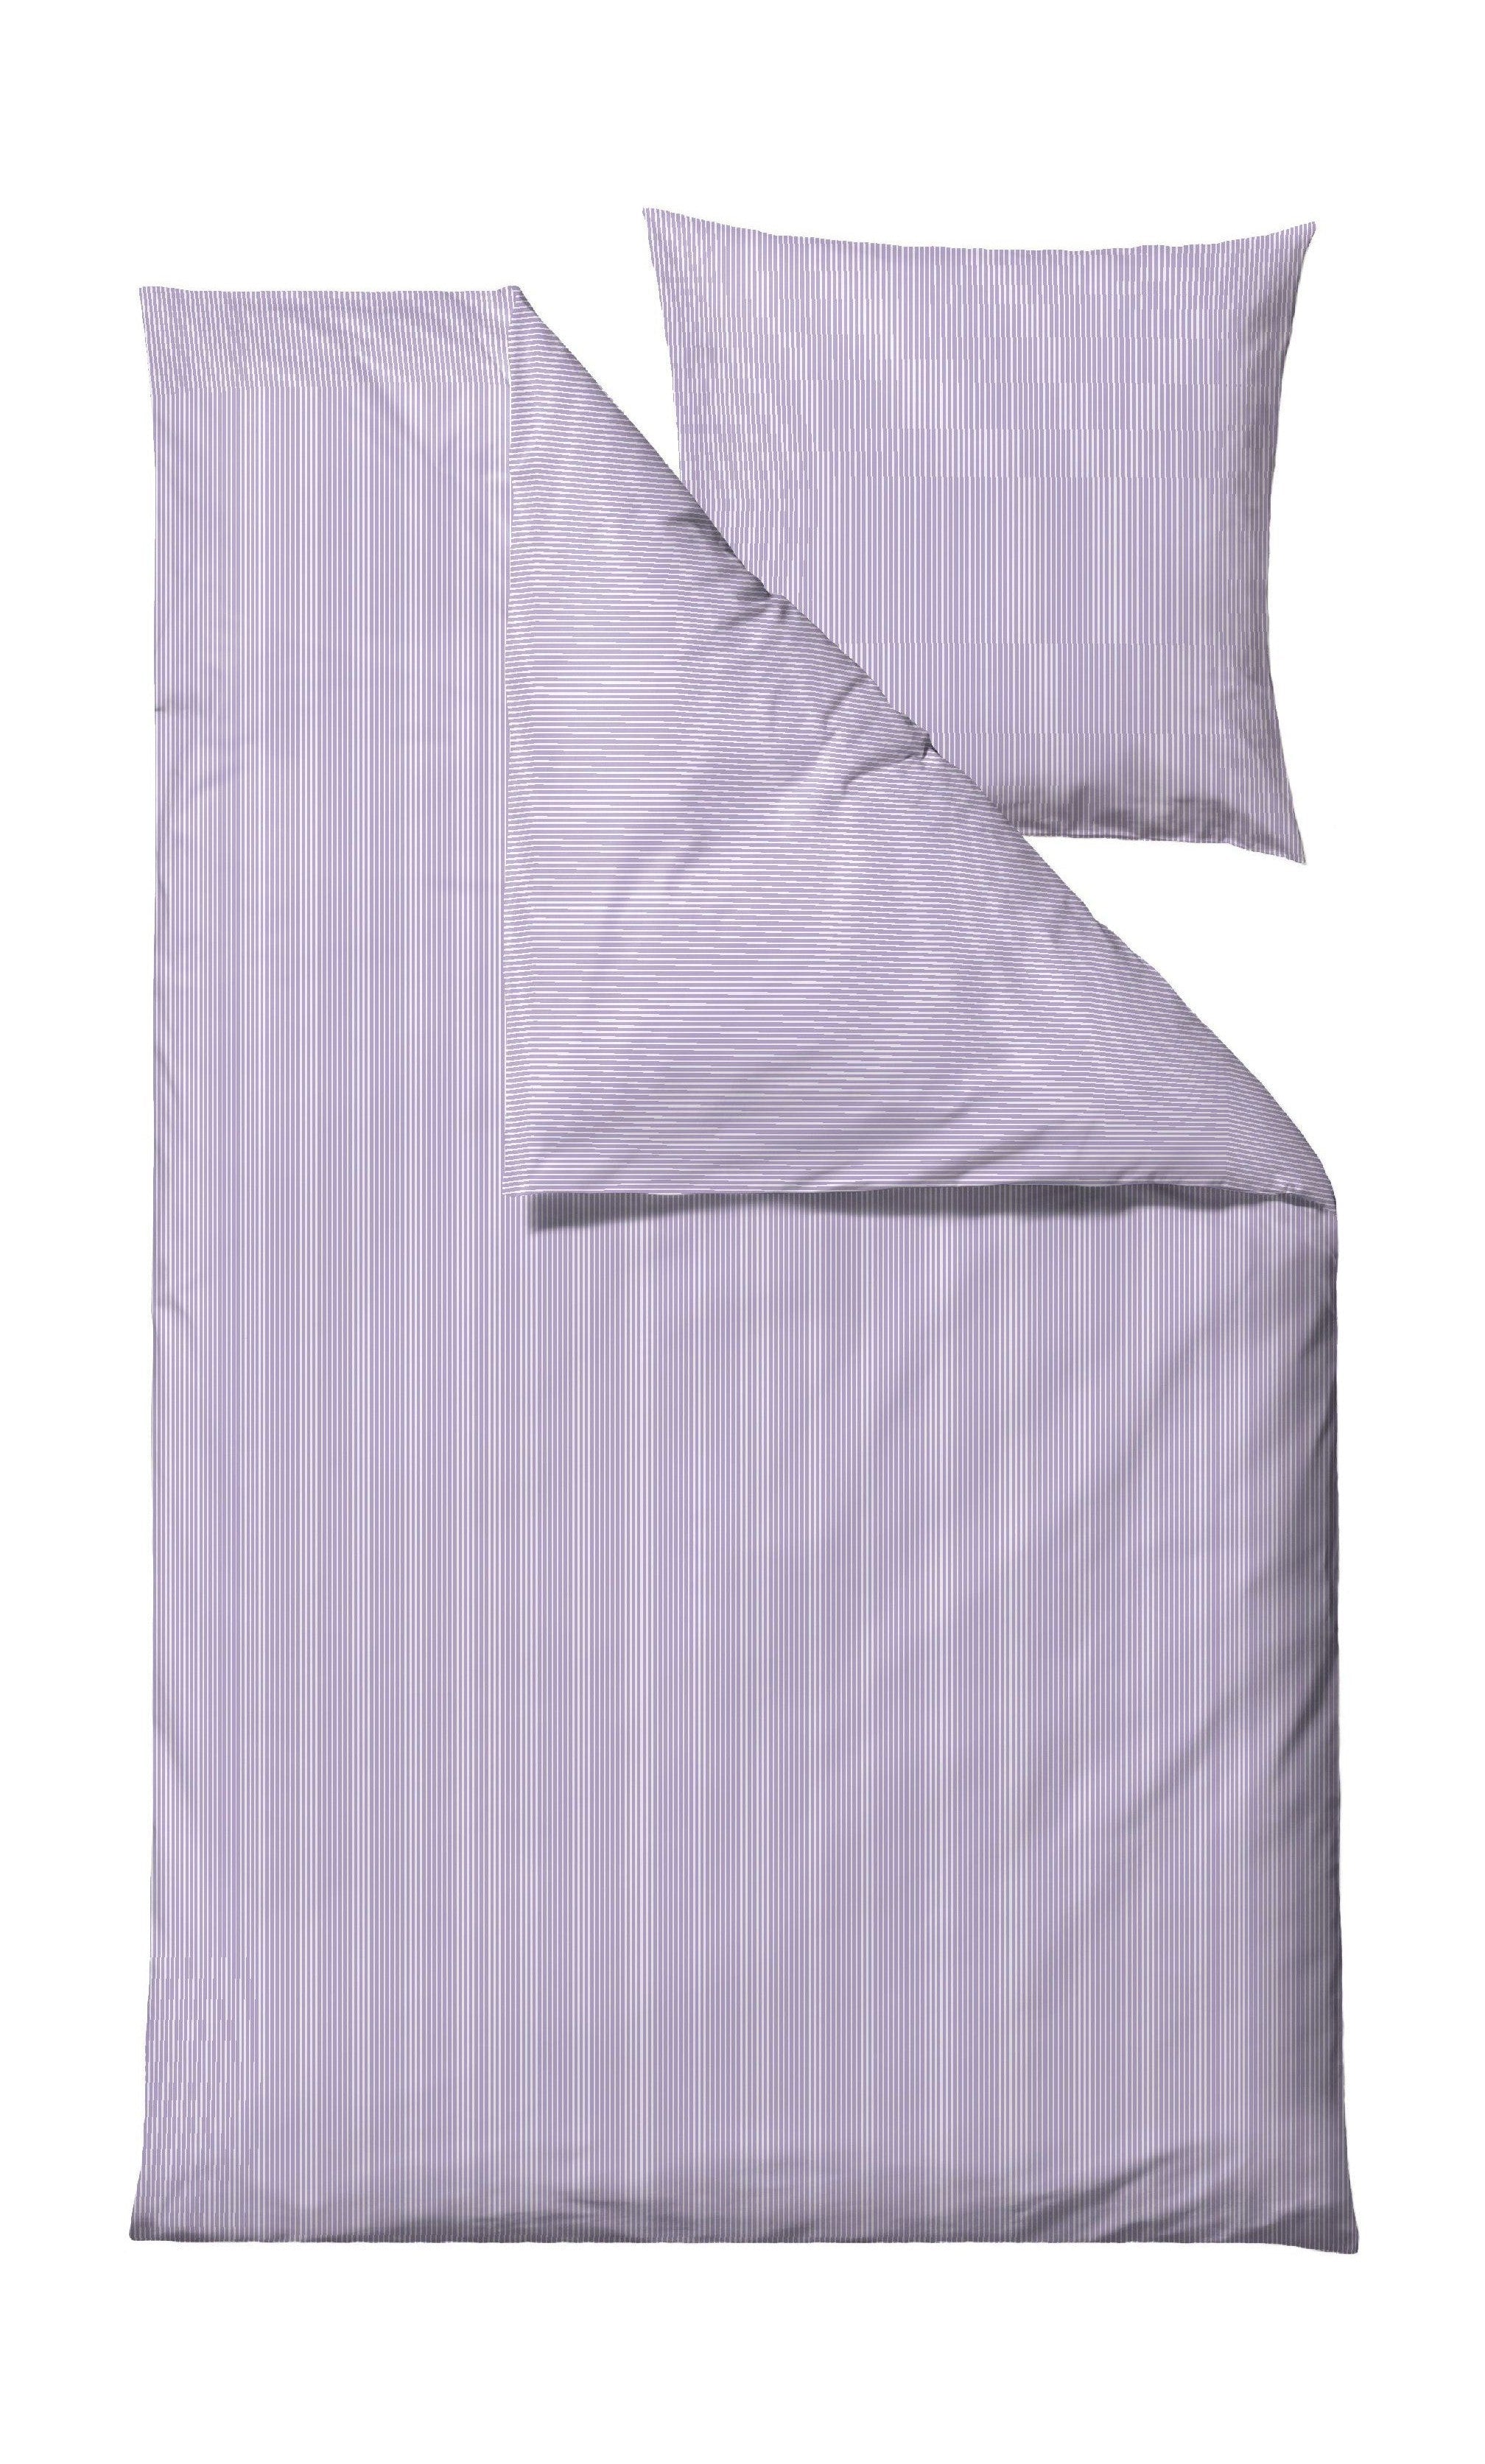 Södahl Fröhliches Bett Leinen 140 x 200 cm, Lavendel